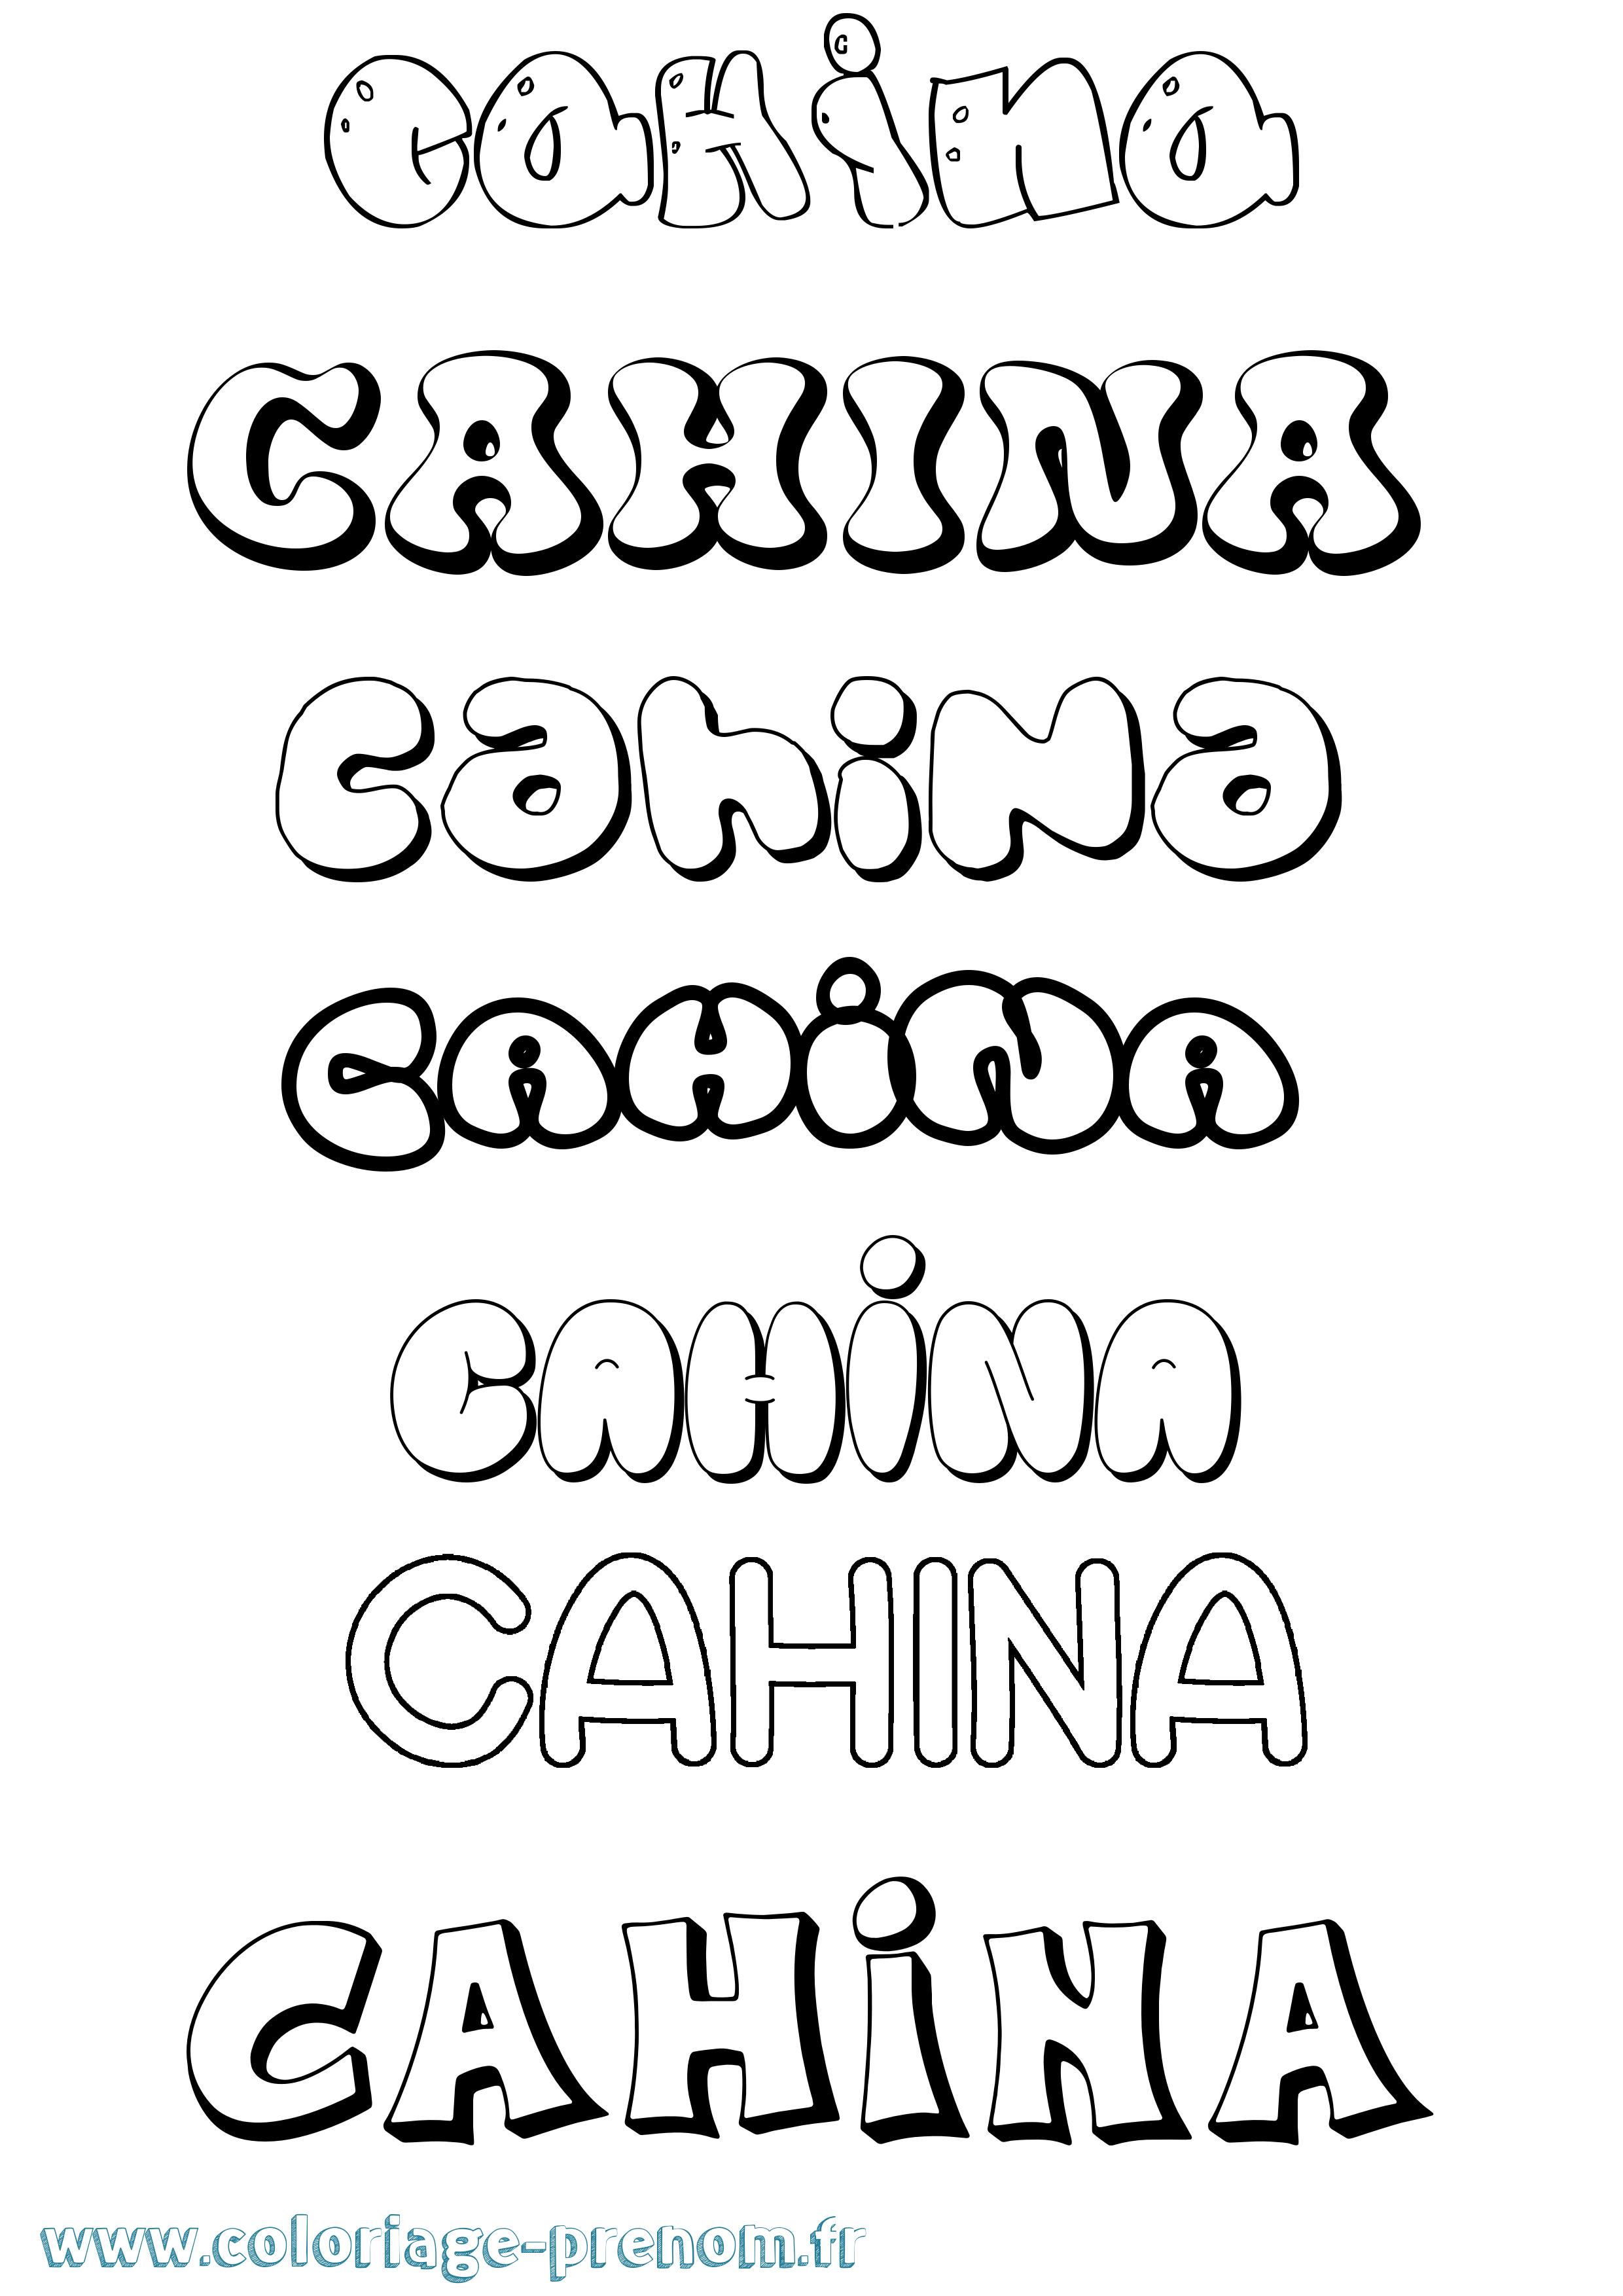 Coloriage prénom Cahina Bubble